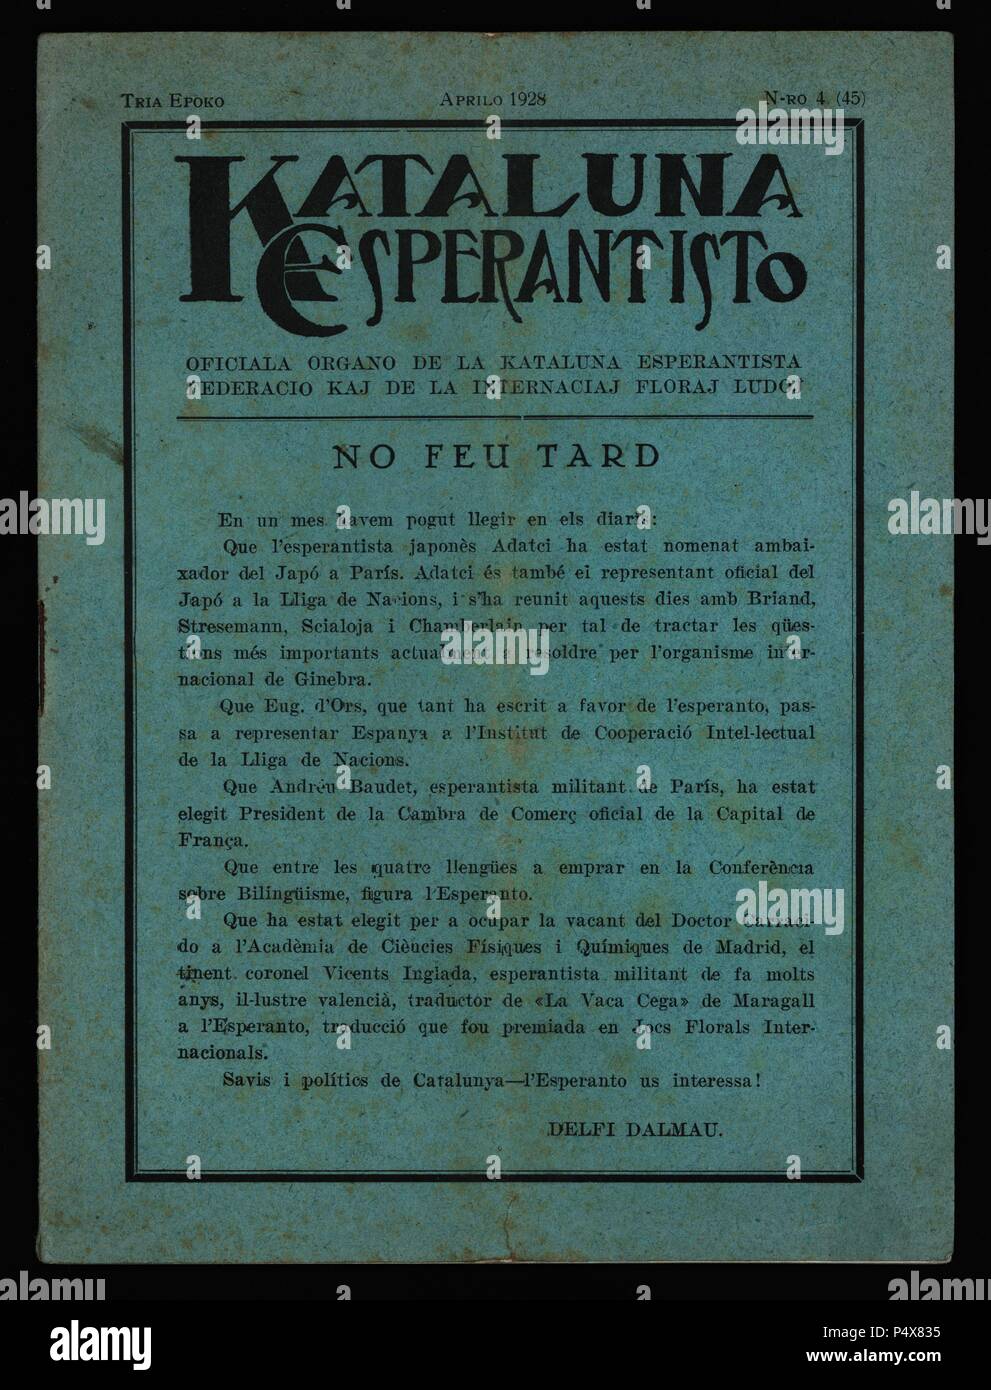 Portada del número cuatro de la revista Kataluna Esperantisto editada el mes de Abril de 1928. Stock Photo